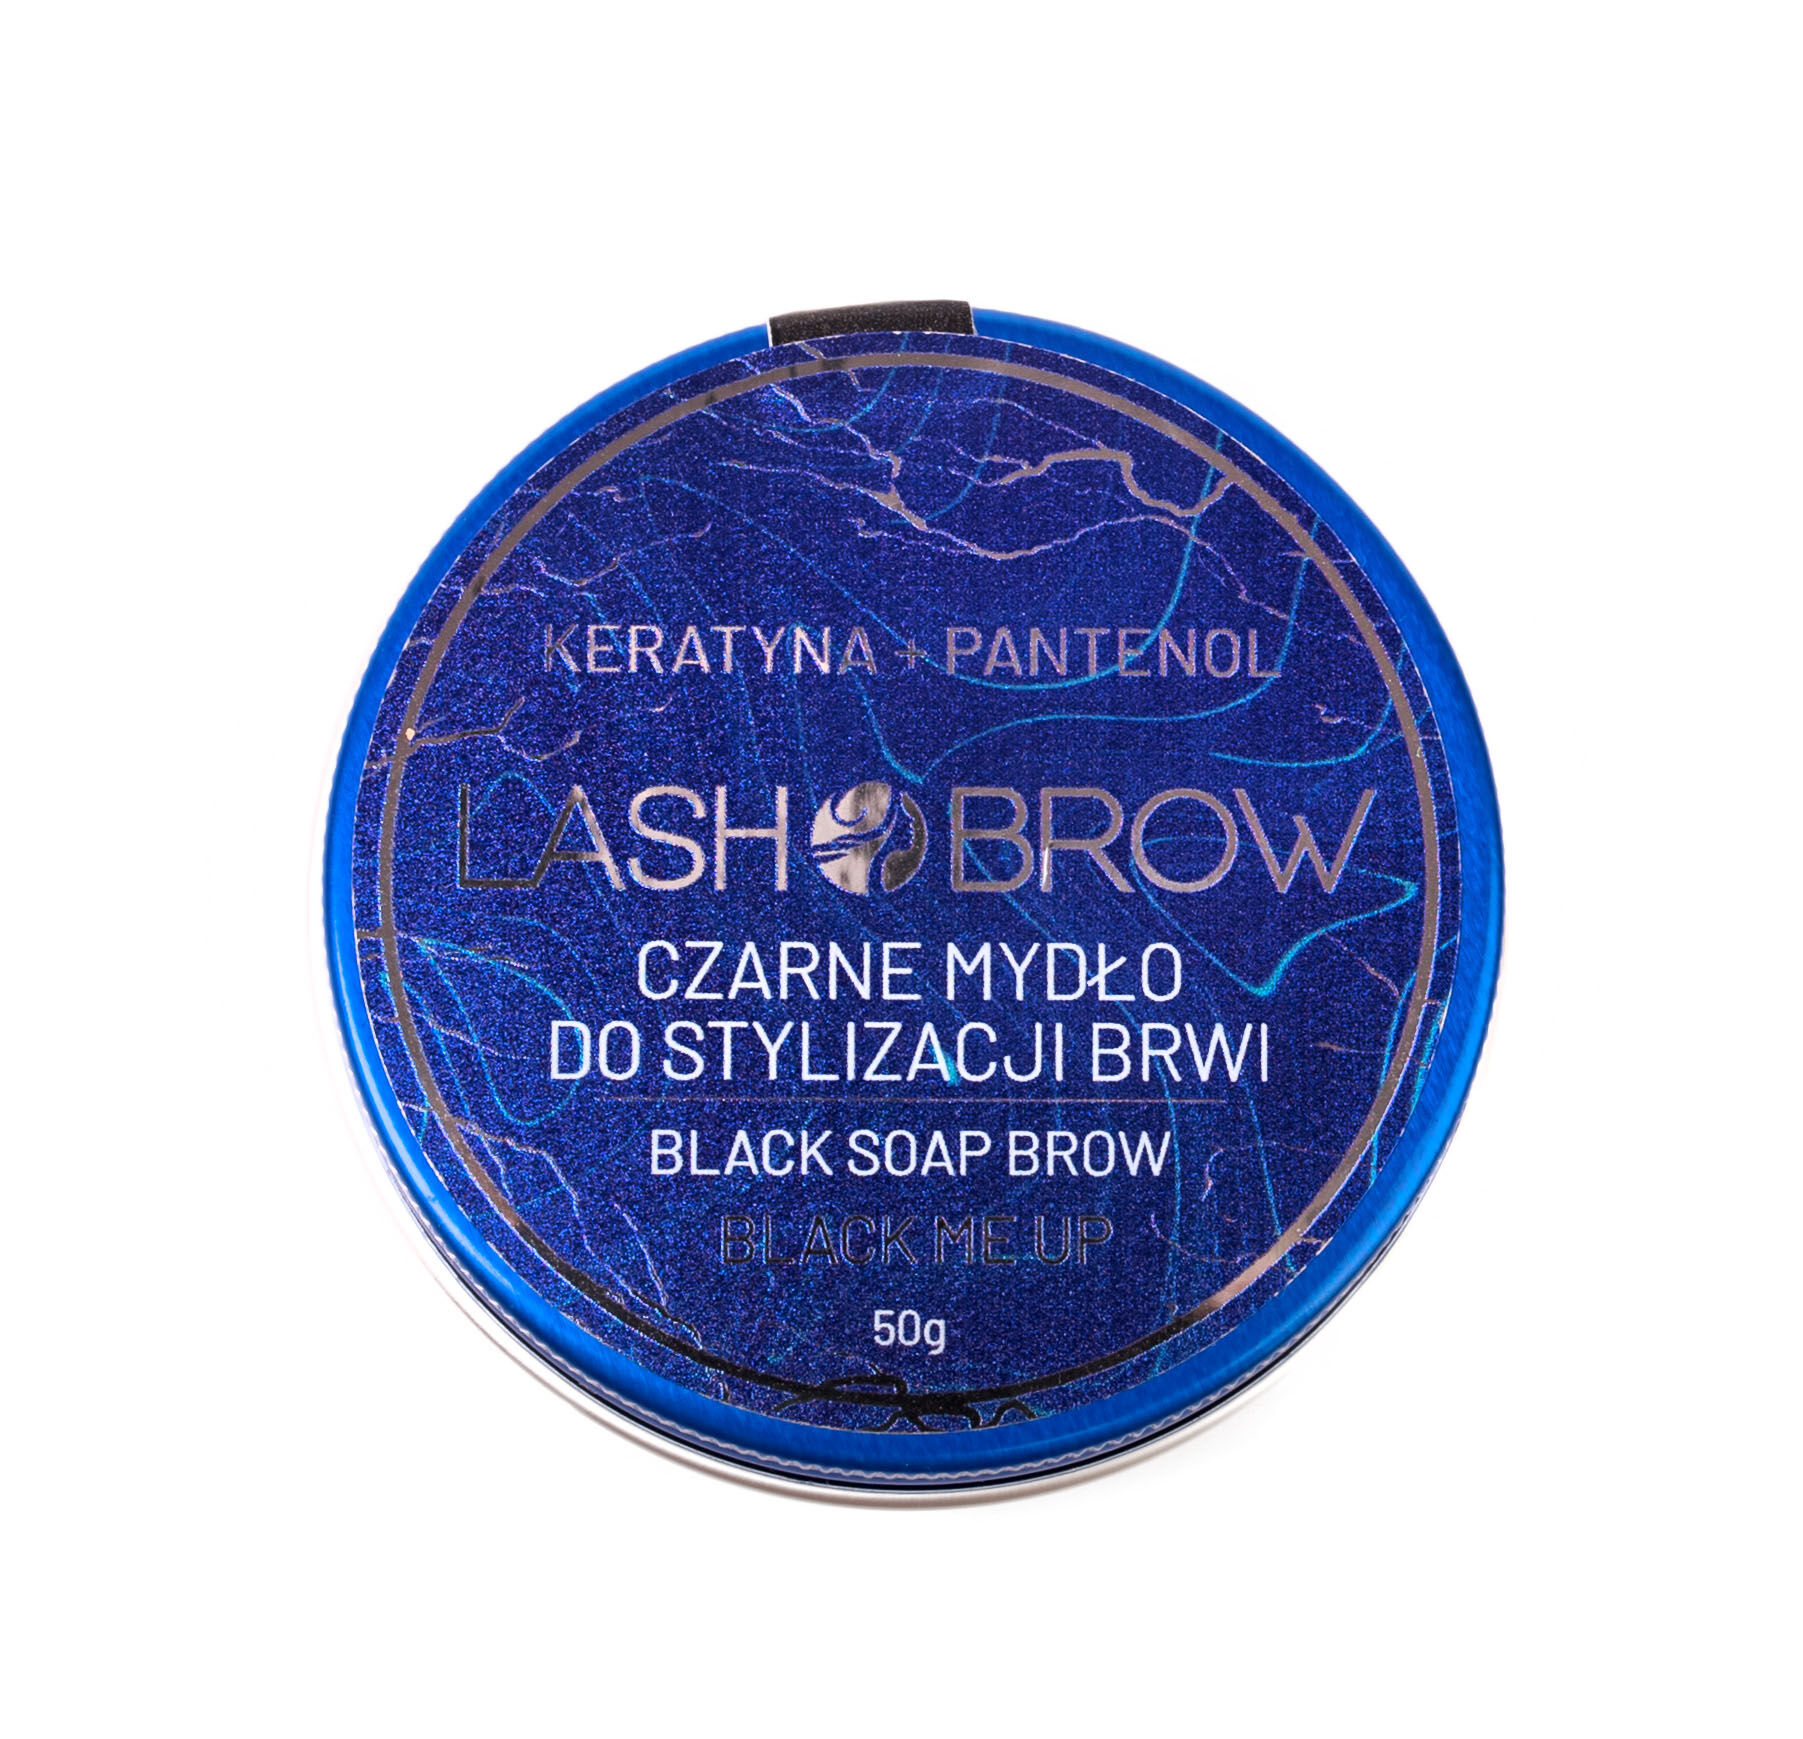 цена Черное мыло для укладки бровей Lash Brow, 50 гр